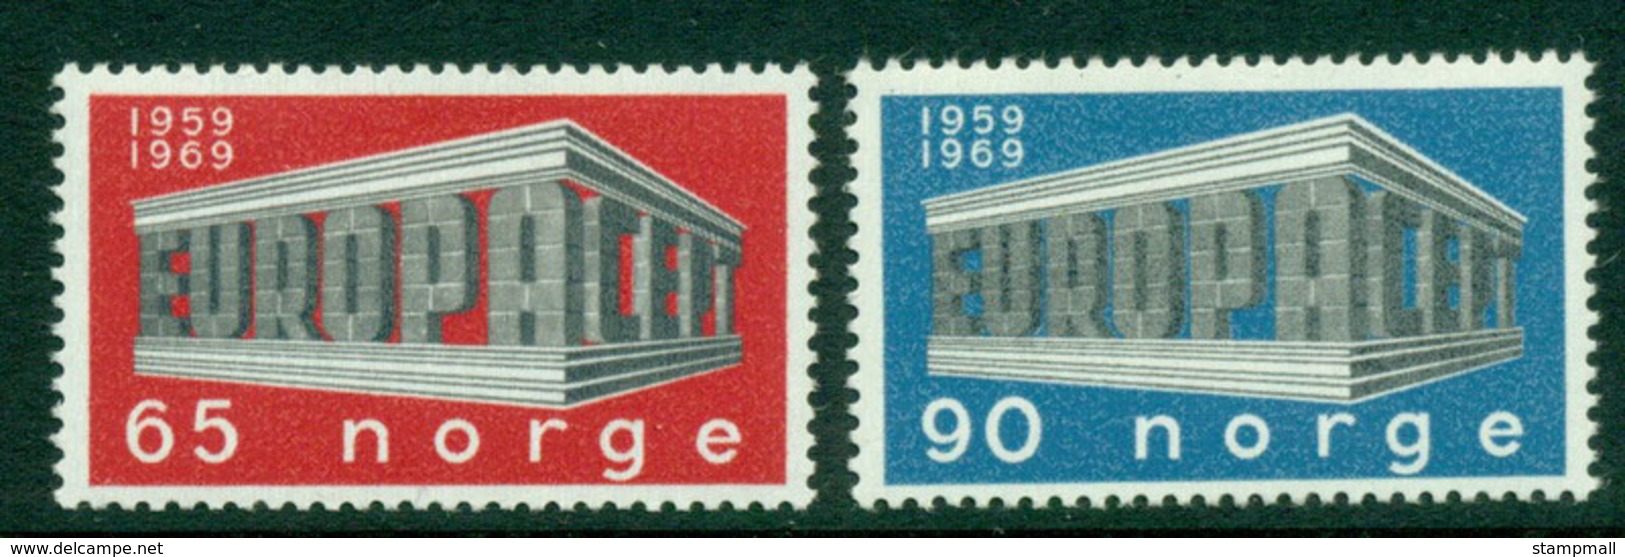 Norway 1969 Europa MUH Lot15820 - Unused Stamps